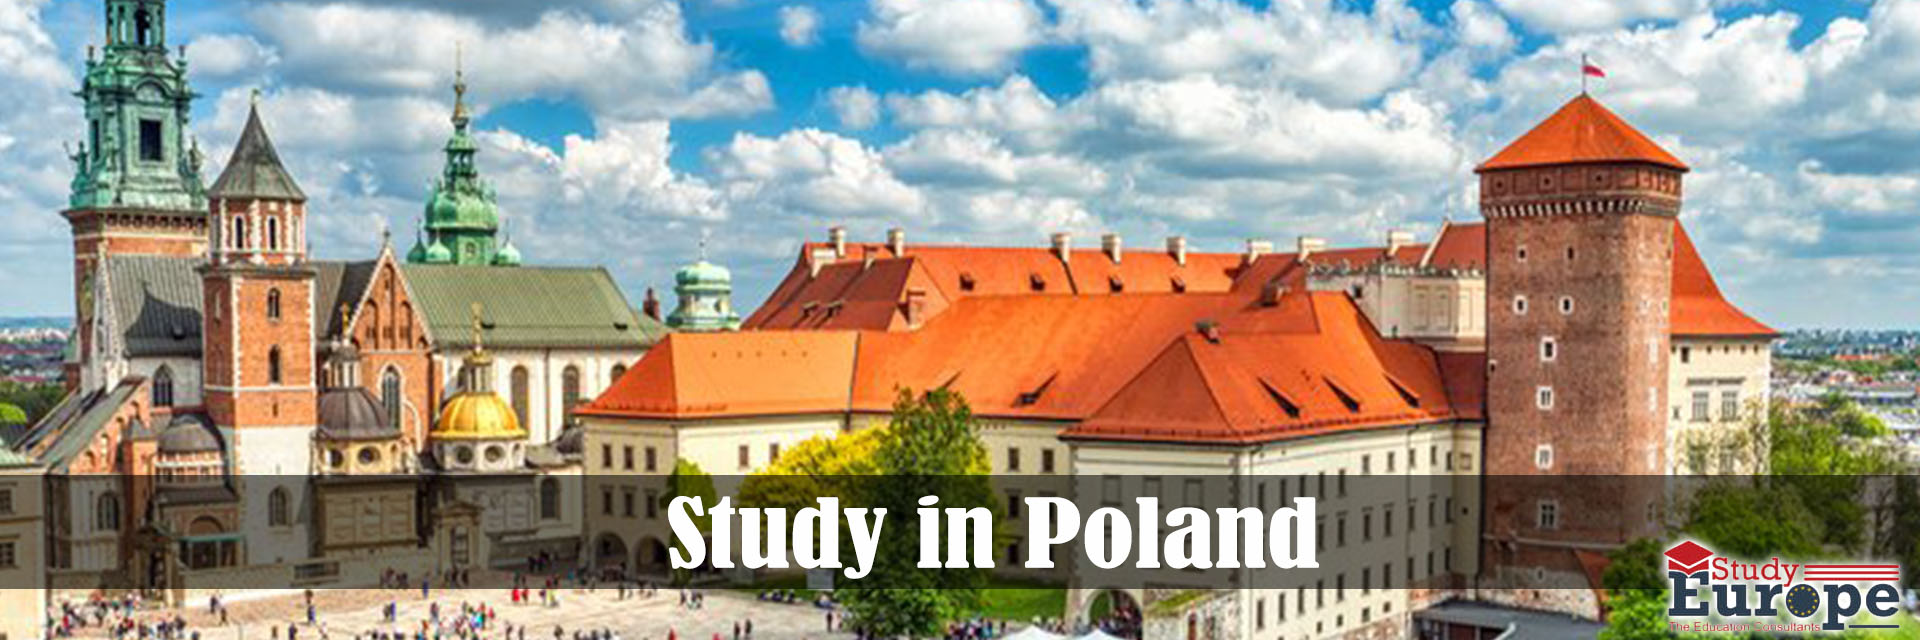 Study in Poland 